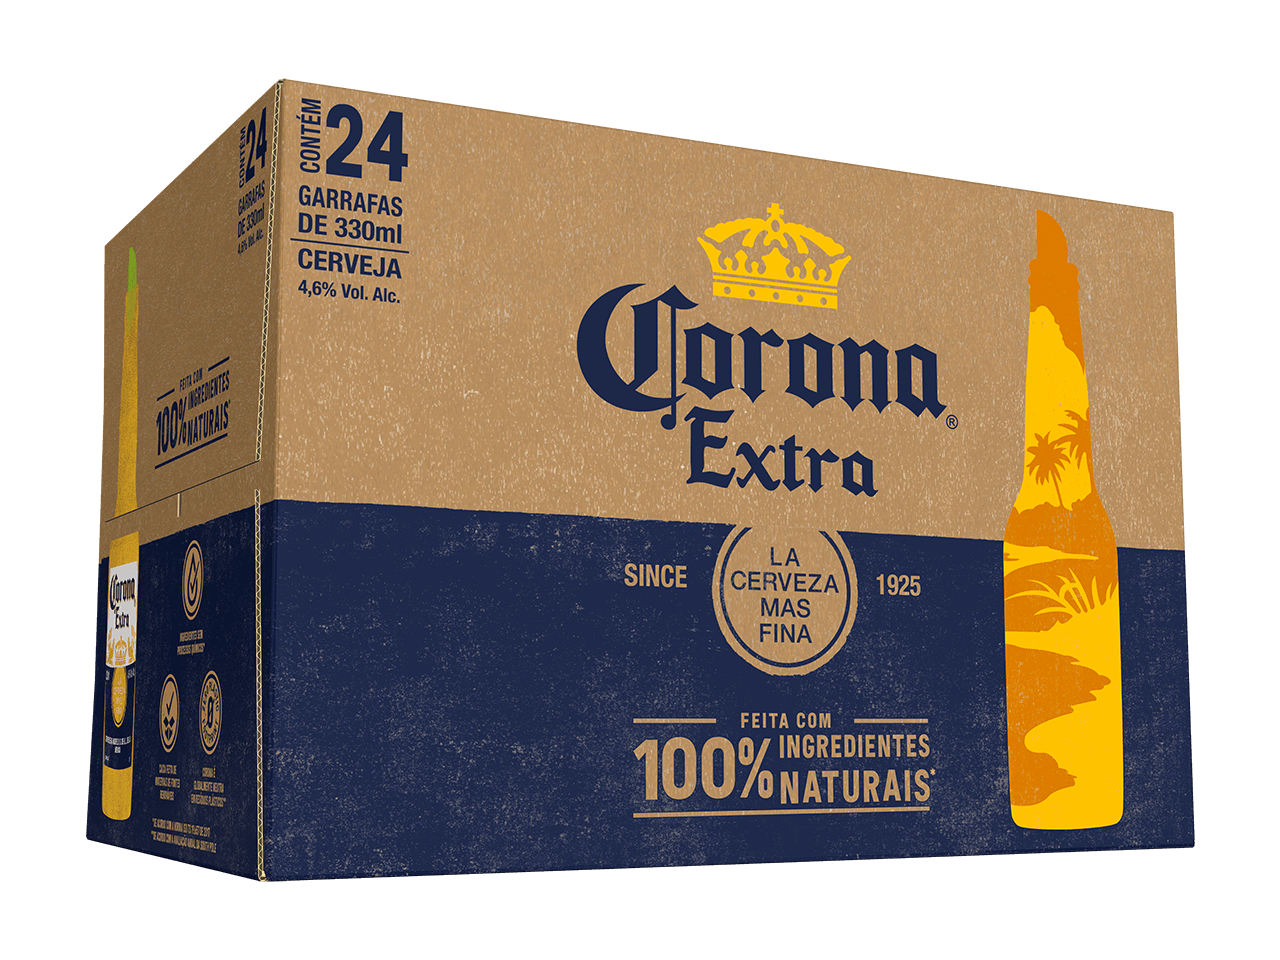 Pack Cerveja Pilsen Corona Garrafa 6 Unidades 330ml Cada